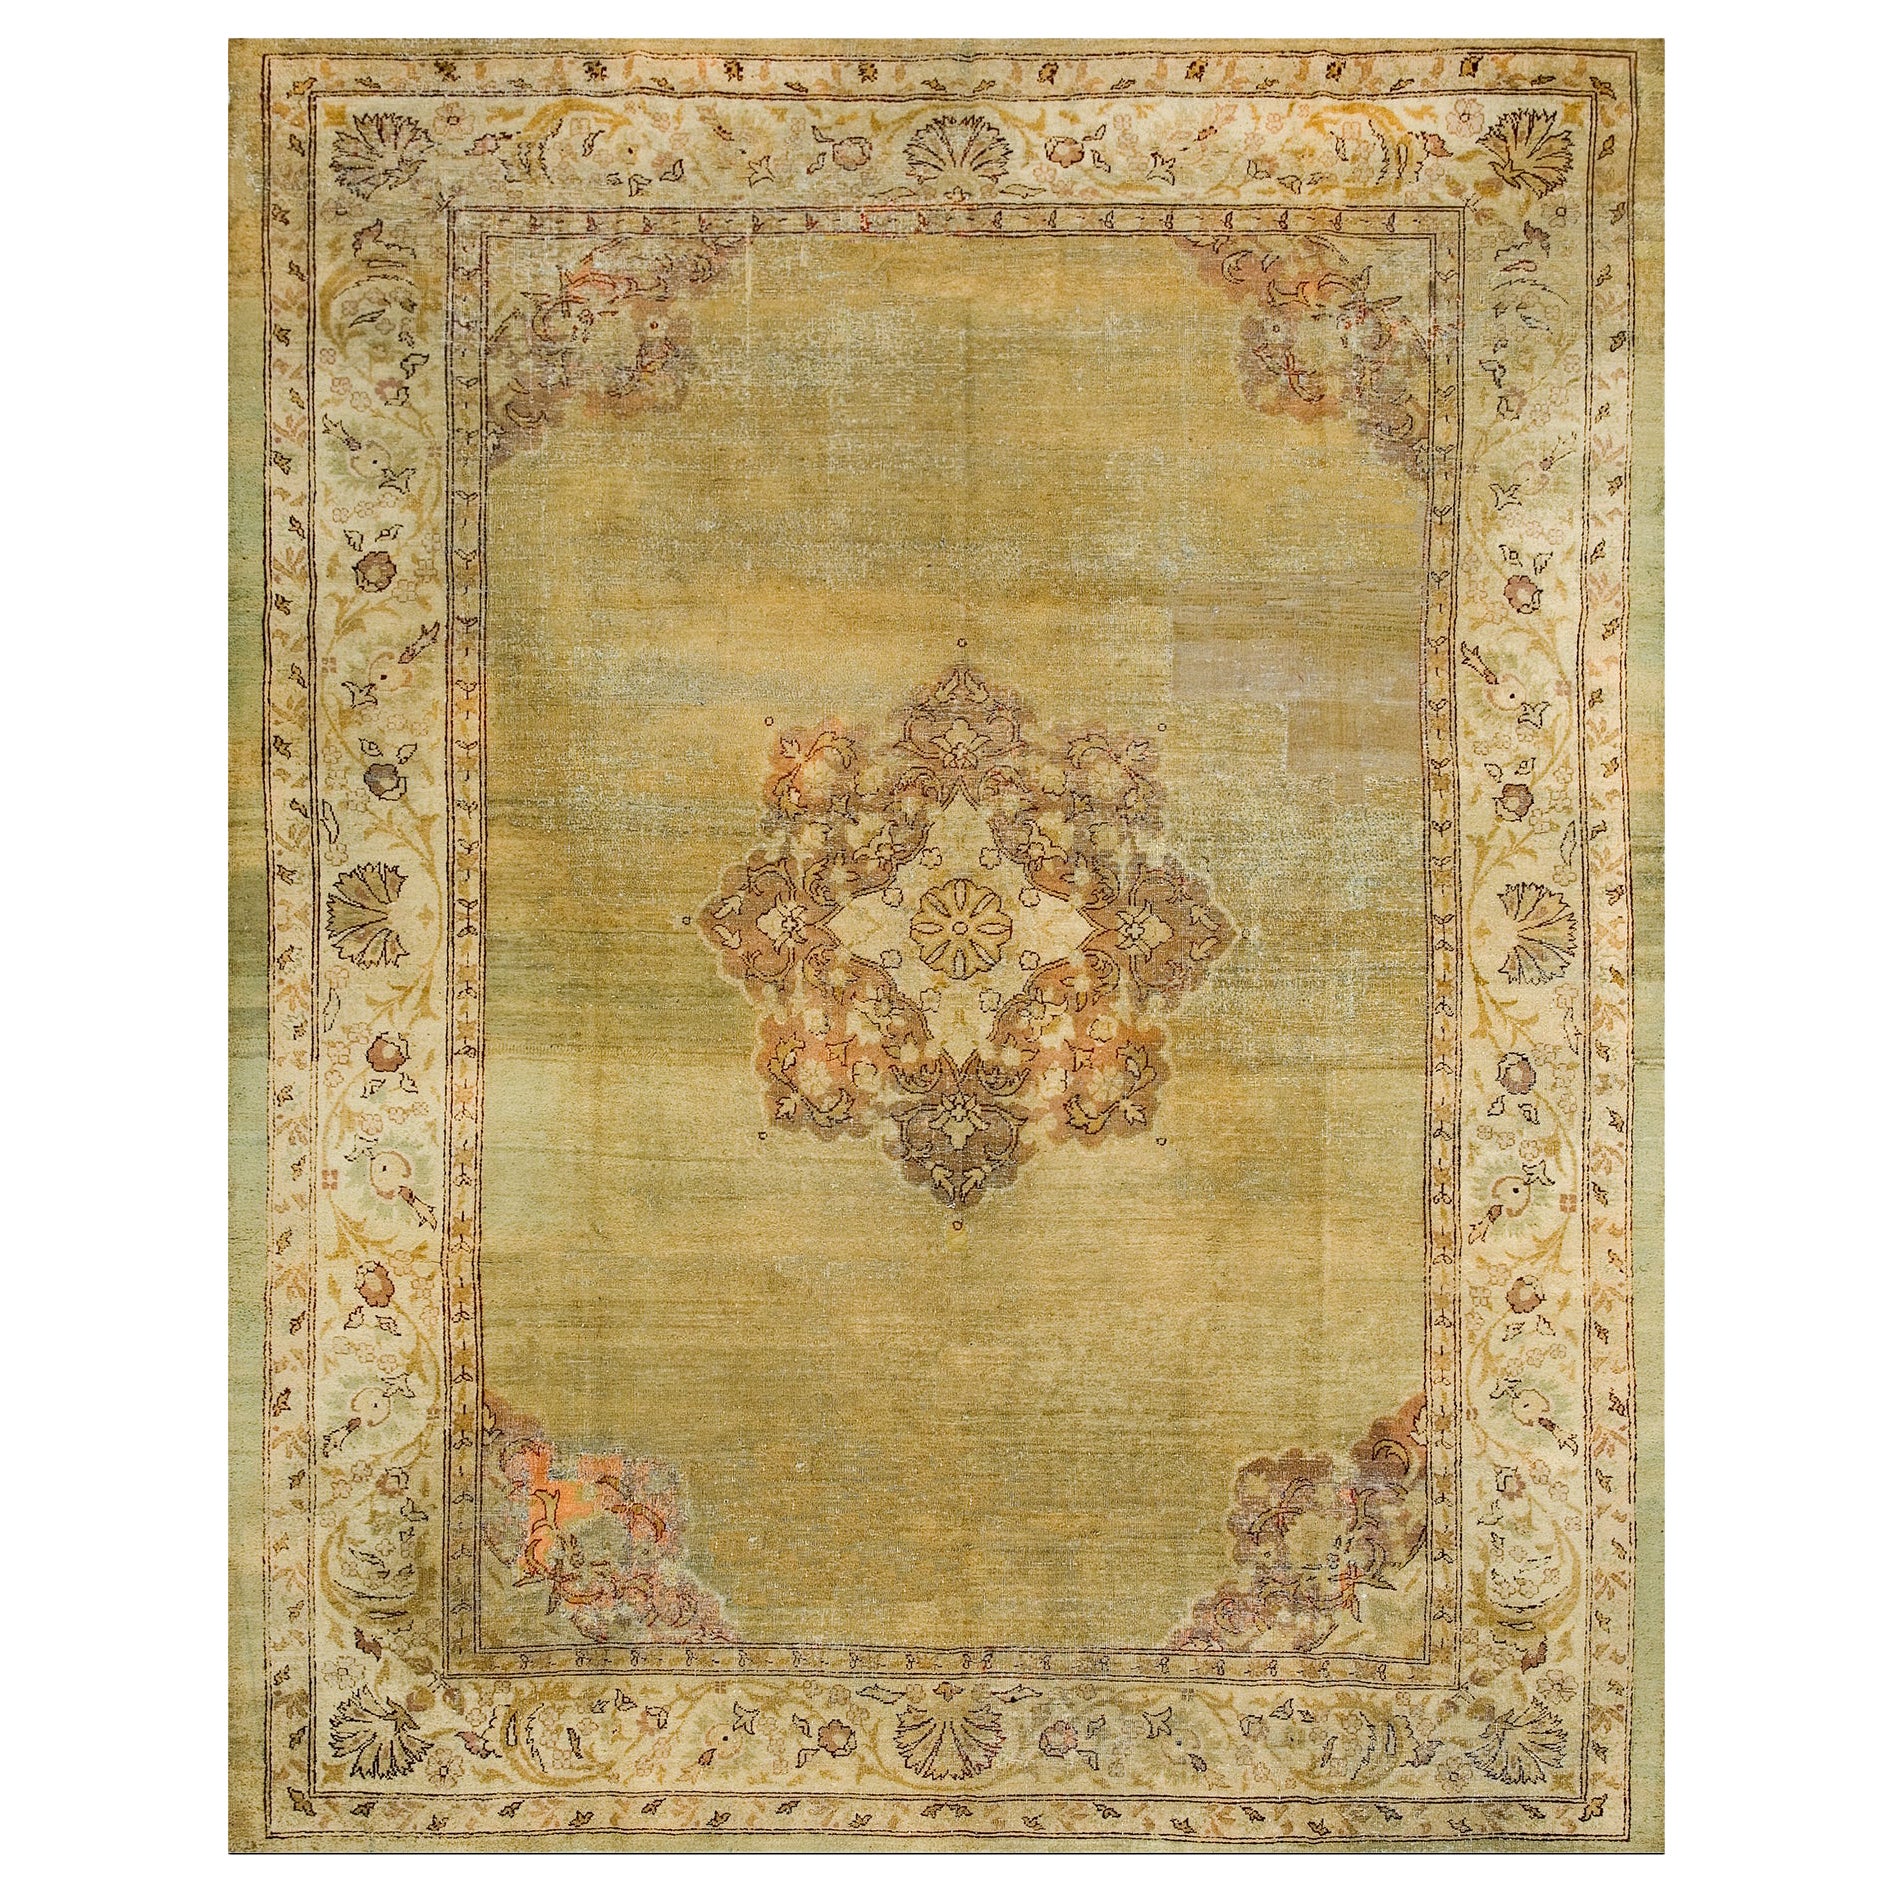 Early 20th Century N. Indian Amritsar Carpet ( 9'2" x 11'8" - 280 x 355 )